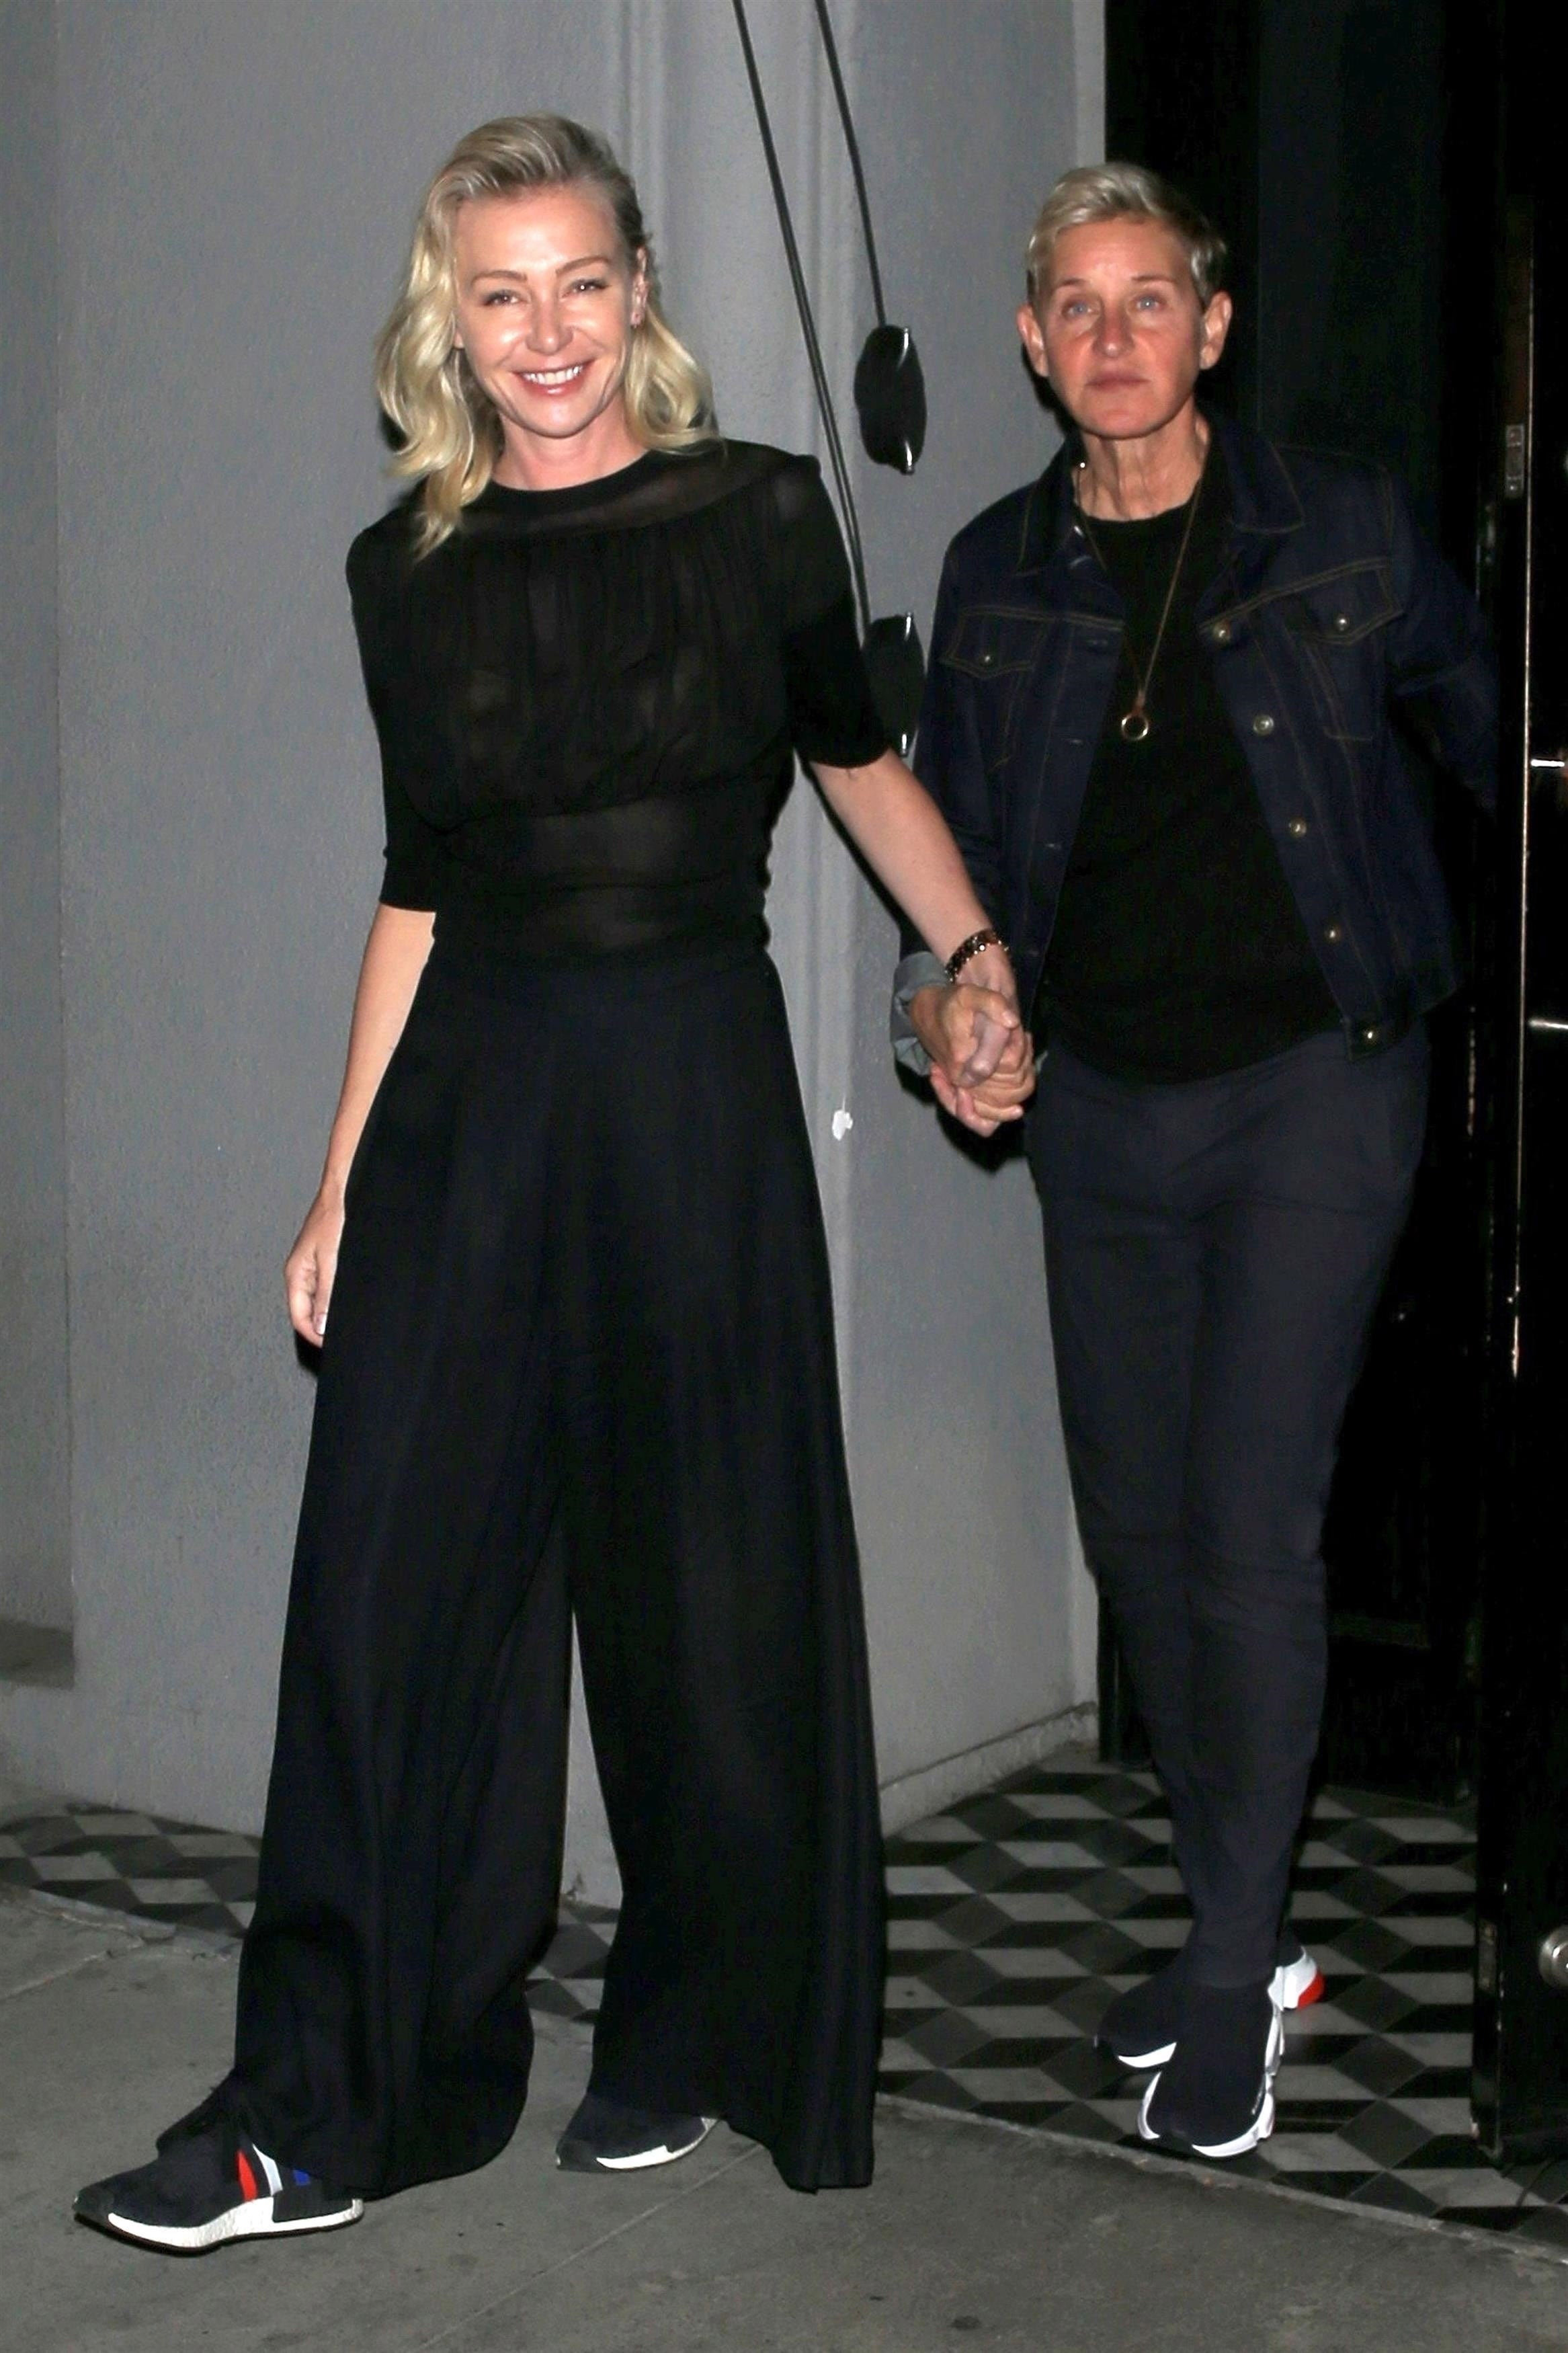 Ellen Degeneres And Portia De Rossi Hold Hands On Date Night Pic Entertainment Tonight